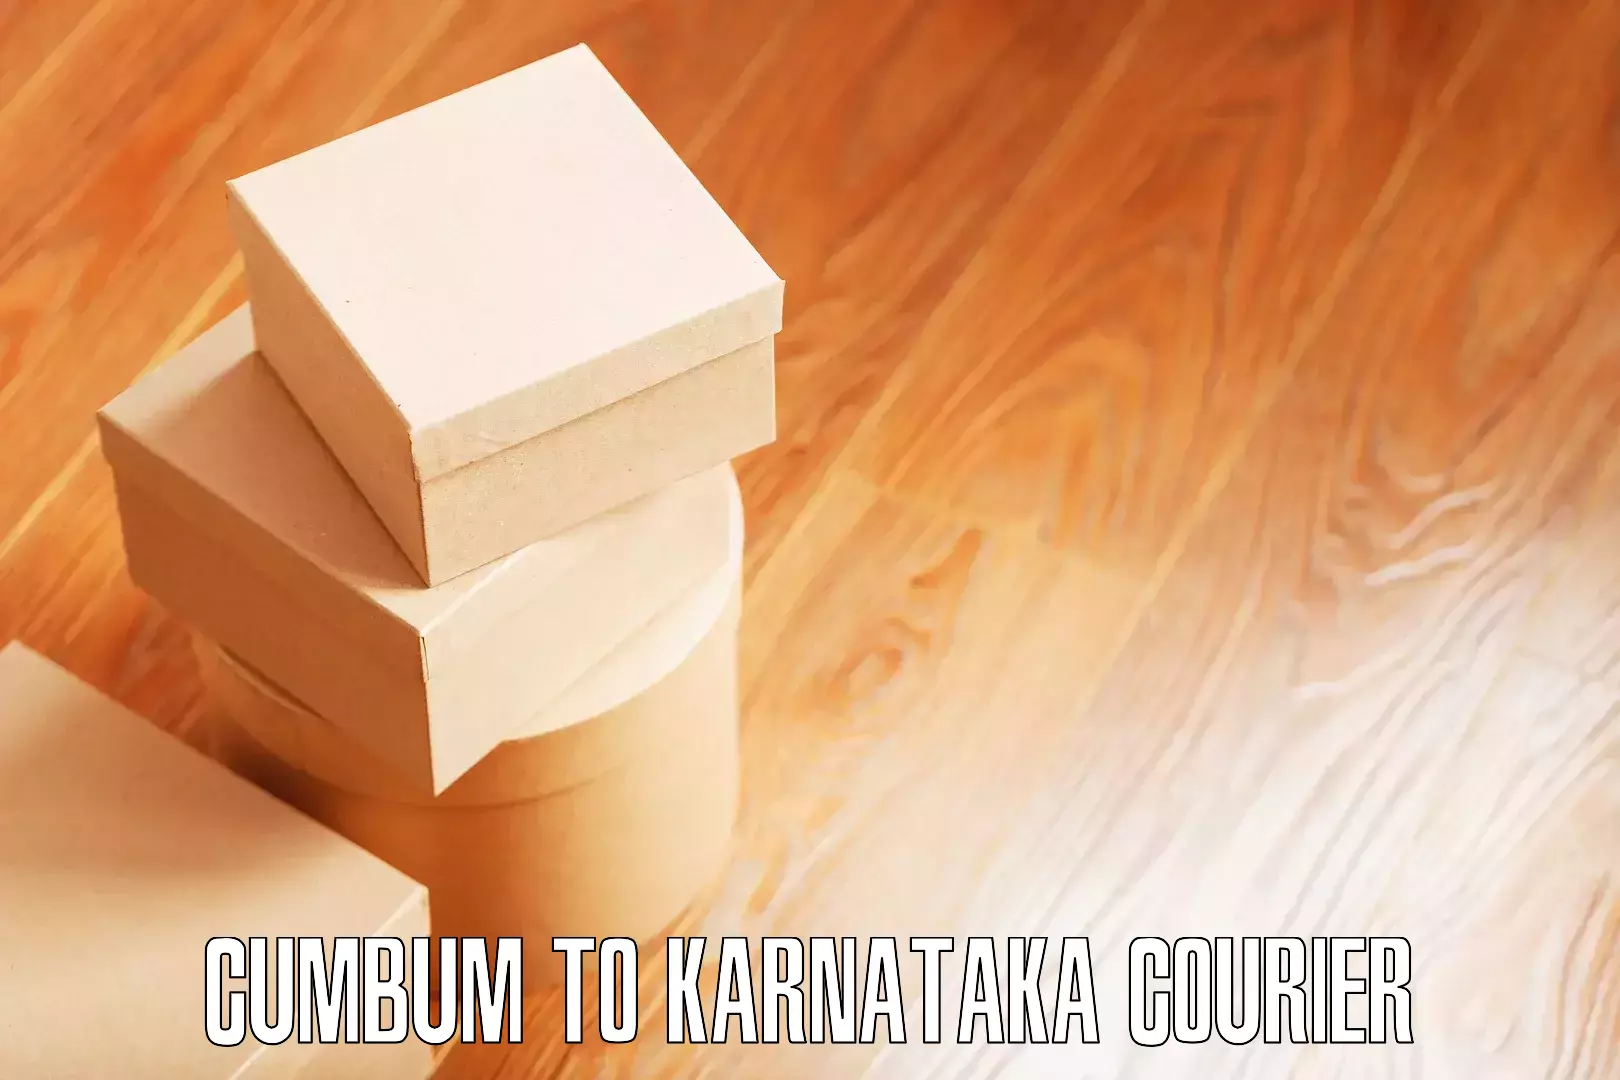 Moving and storage services Cumbum to Chintamani Kolar